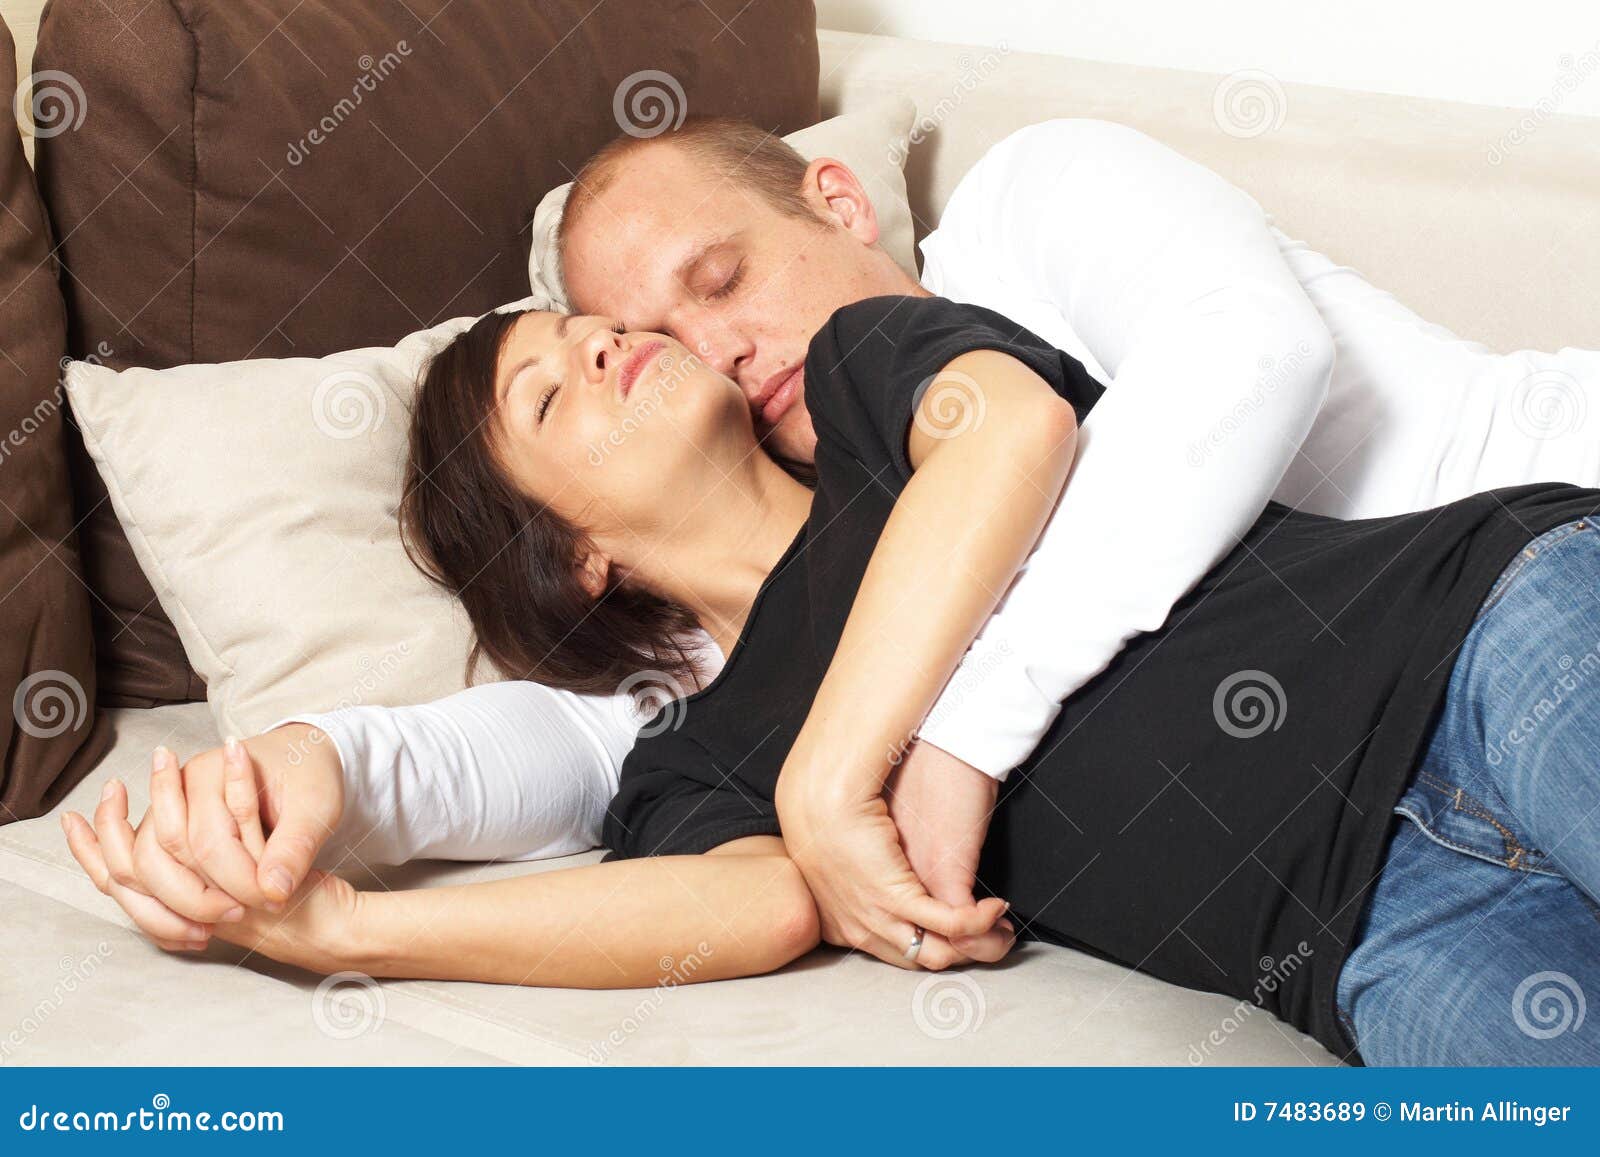 romantic photo on sleeping couple